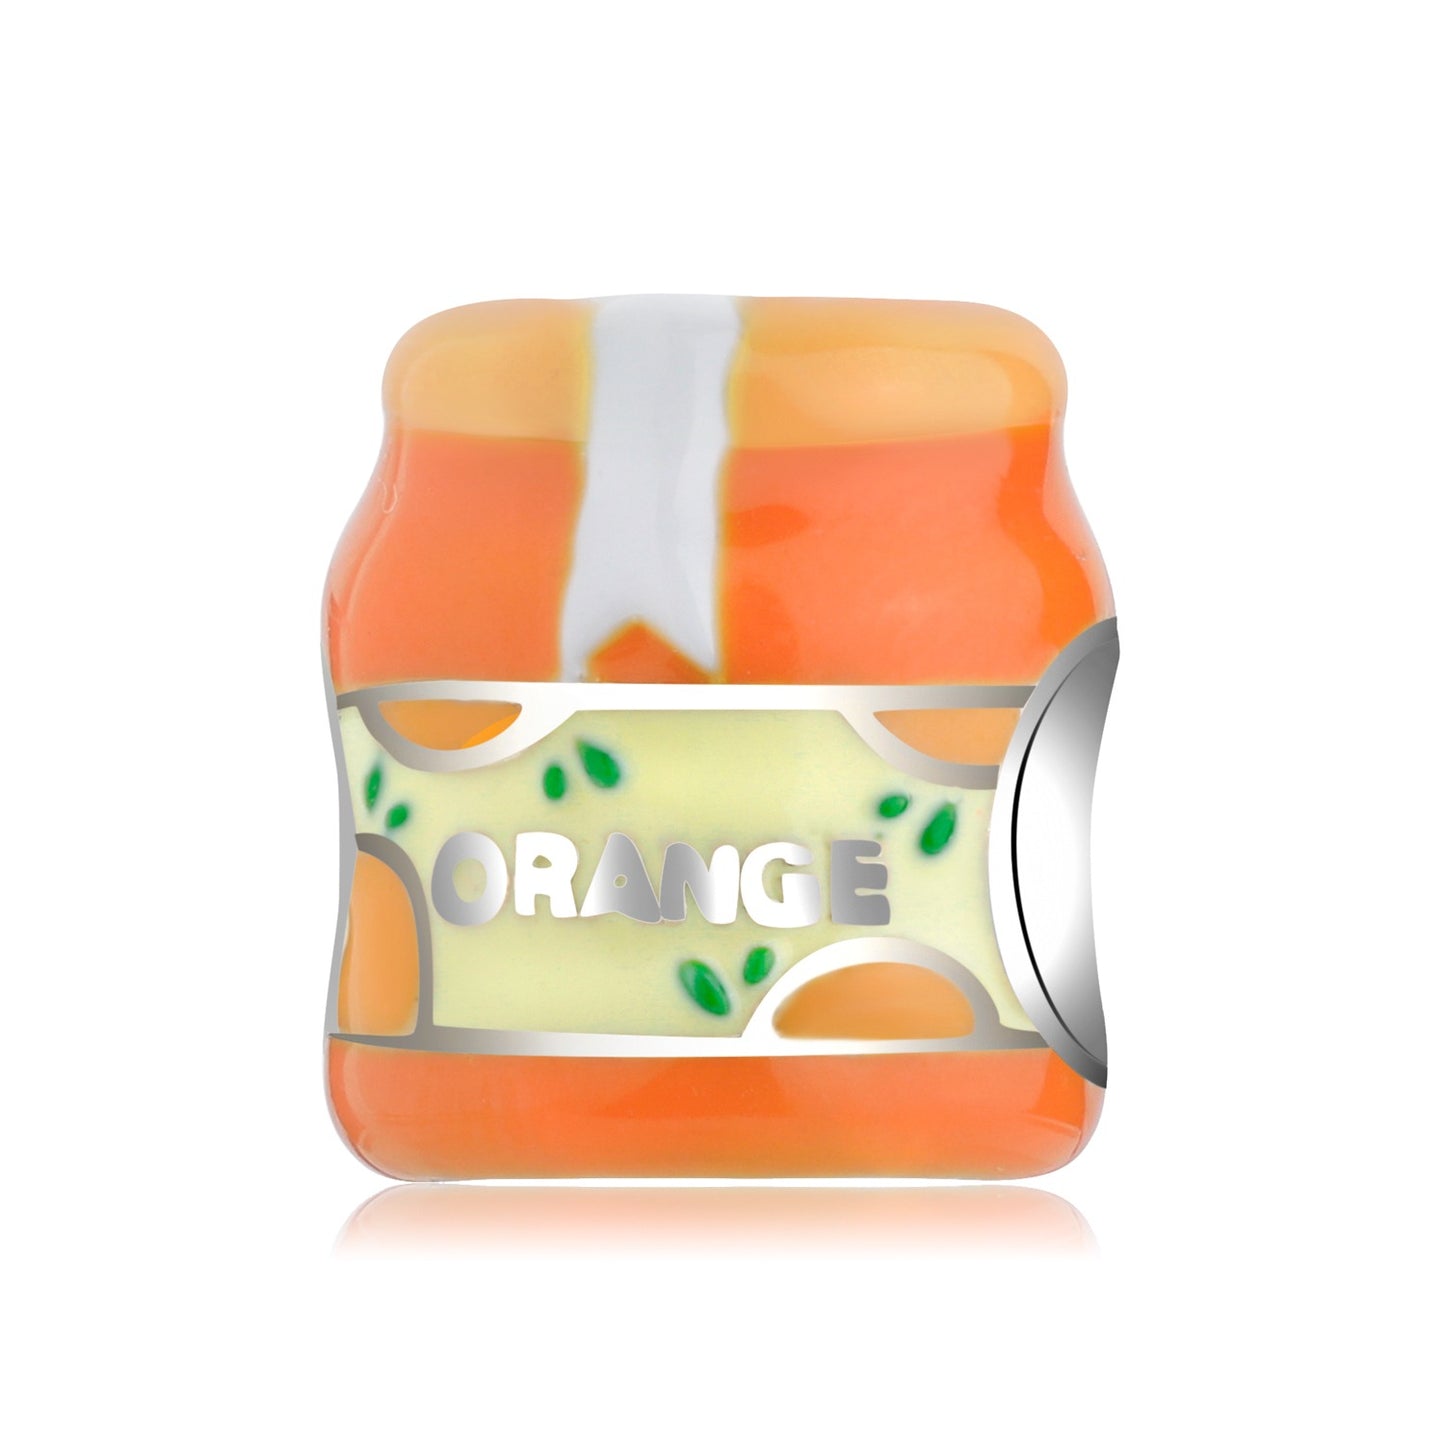 925 Sterling Silver, Oranges Jar Charm